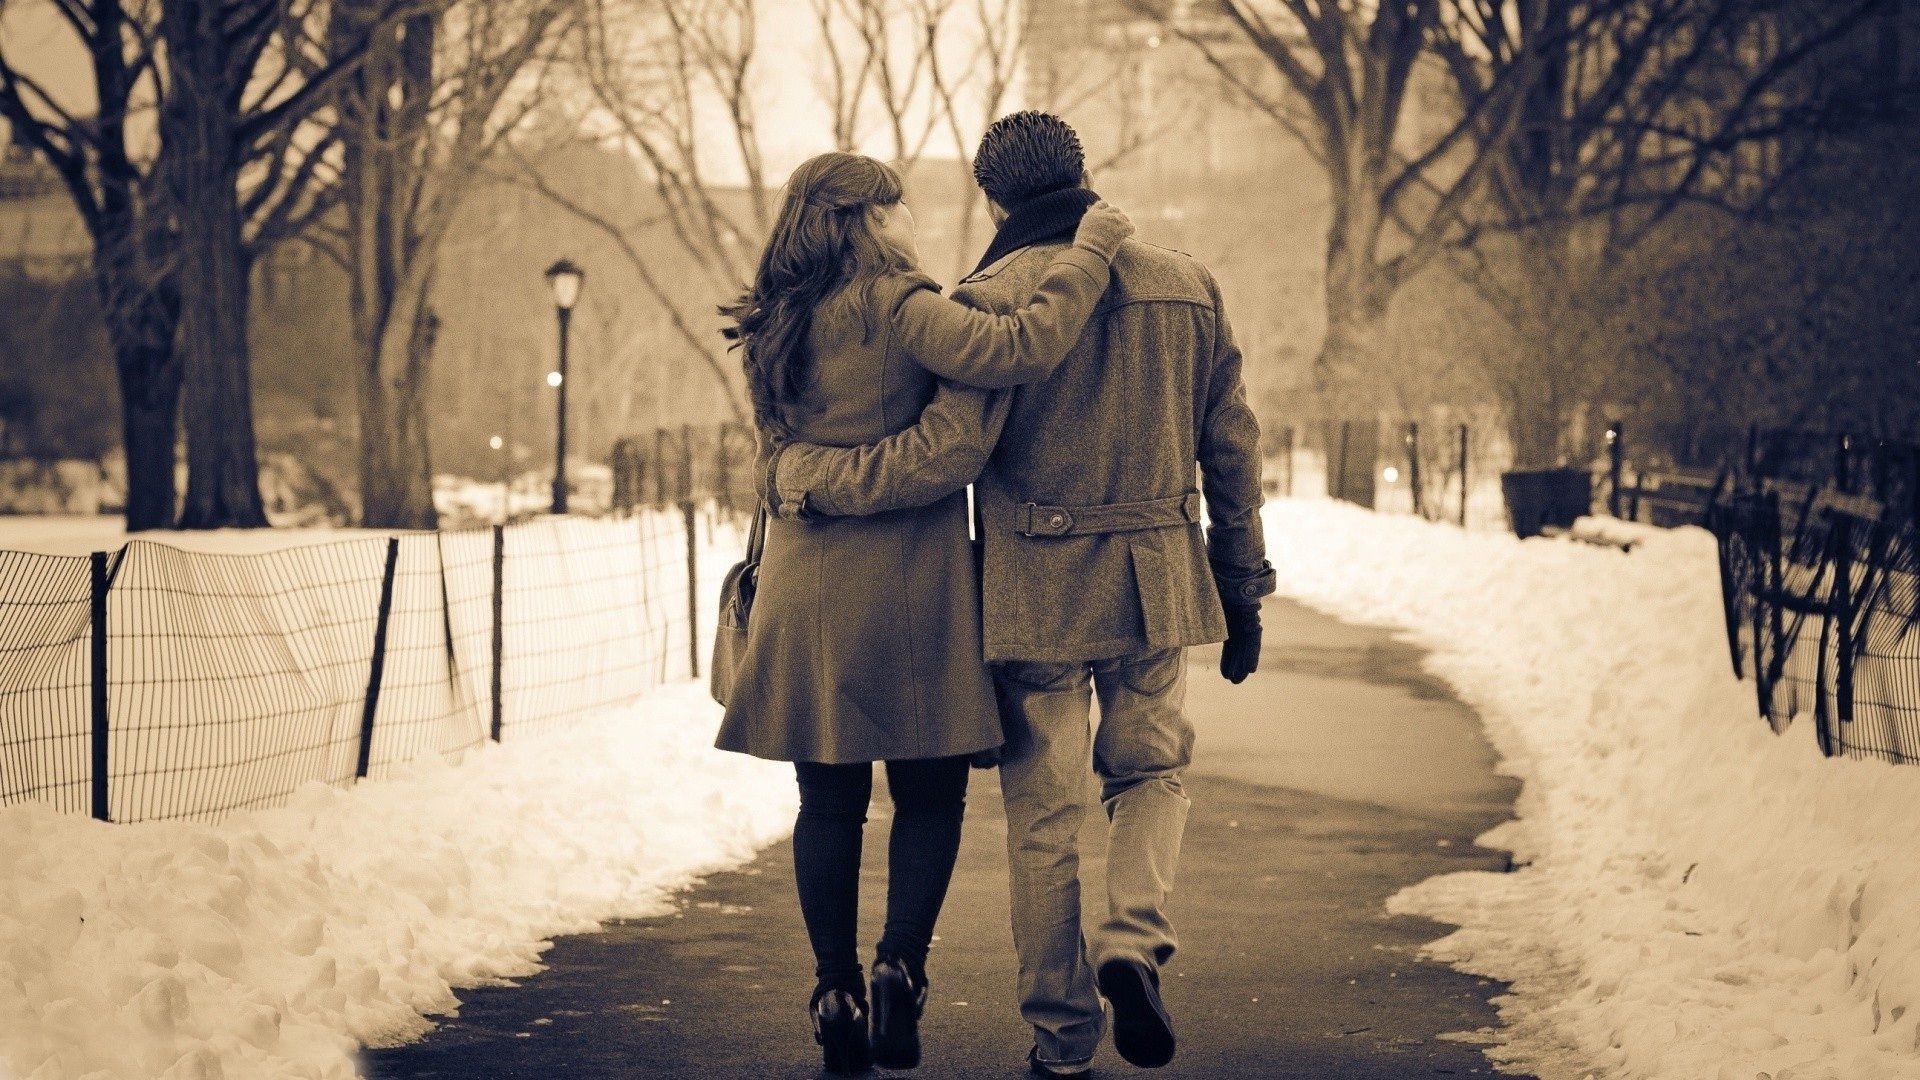 Romantic Couple Morning Walk | Travel | Pinterest | Romantic couples